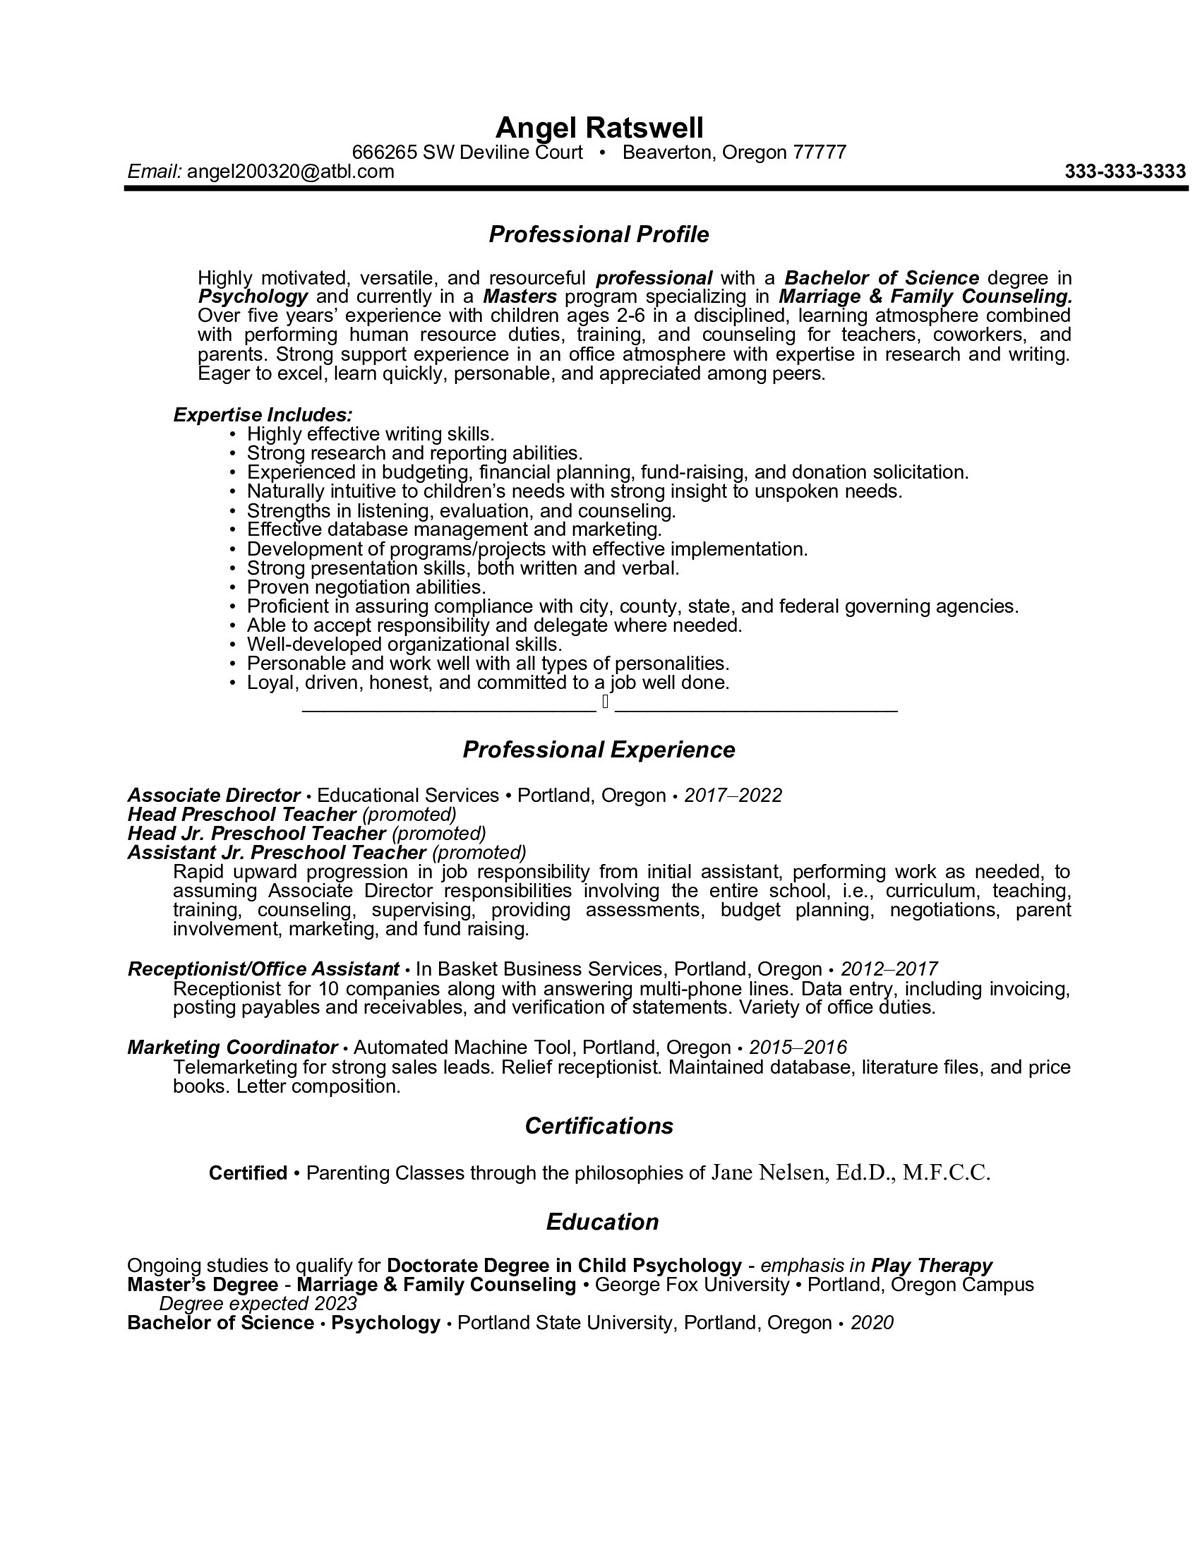 Sample resume: Elementary Education, Mid Experience, Chronological